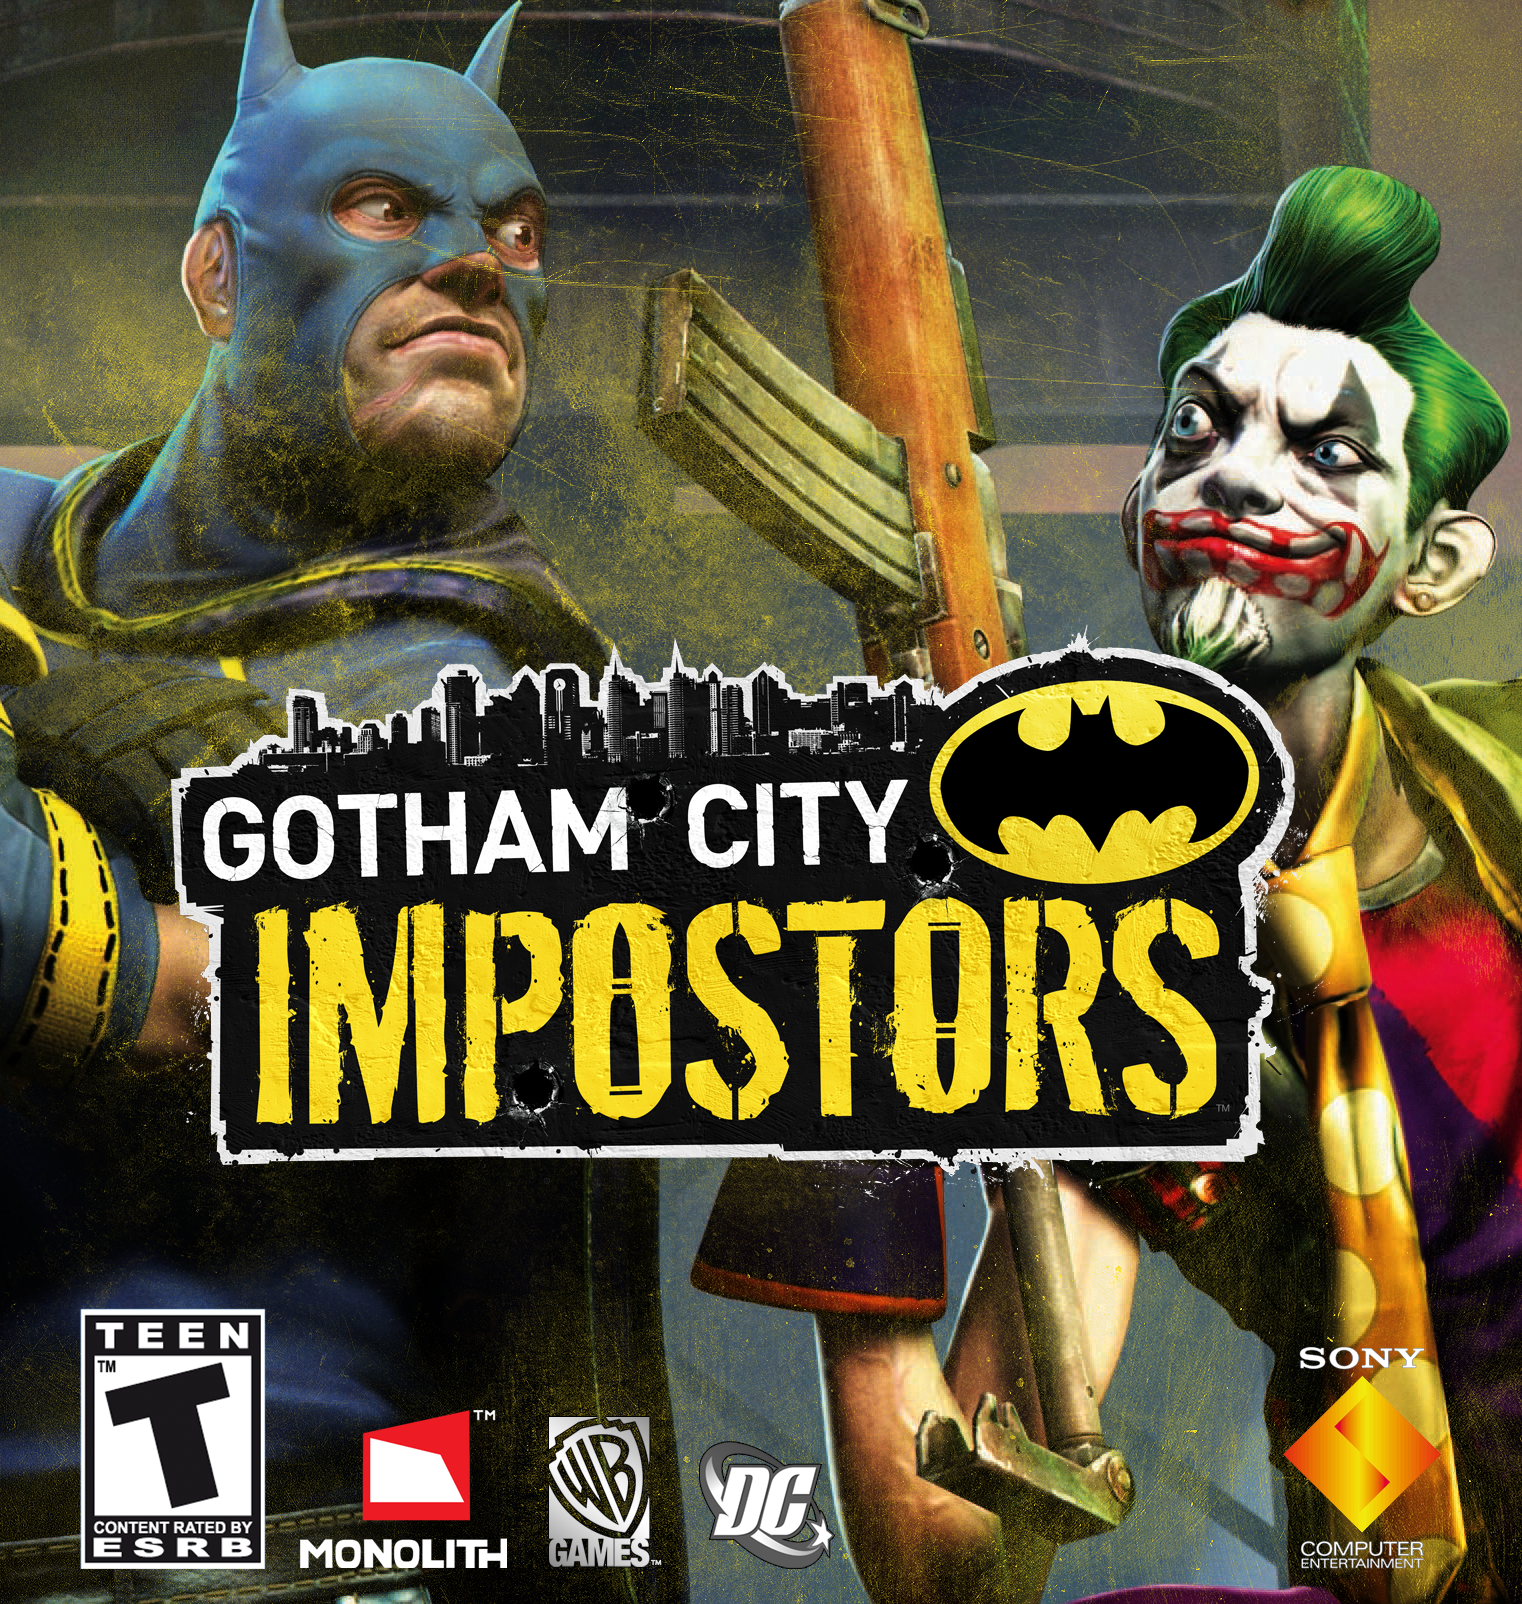 Gotham City Impostors Backgrounds on Wallpapers Vista